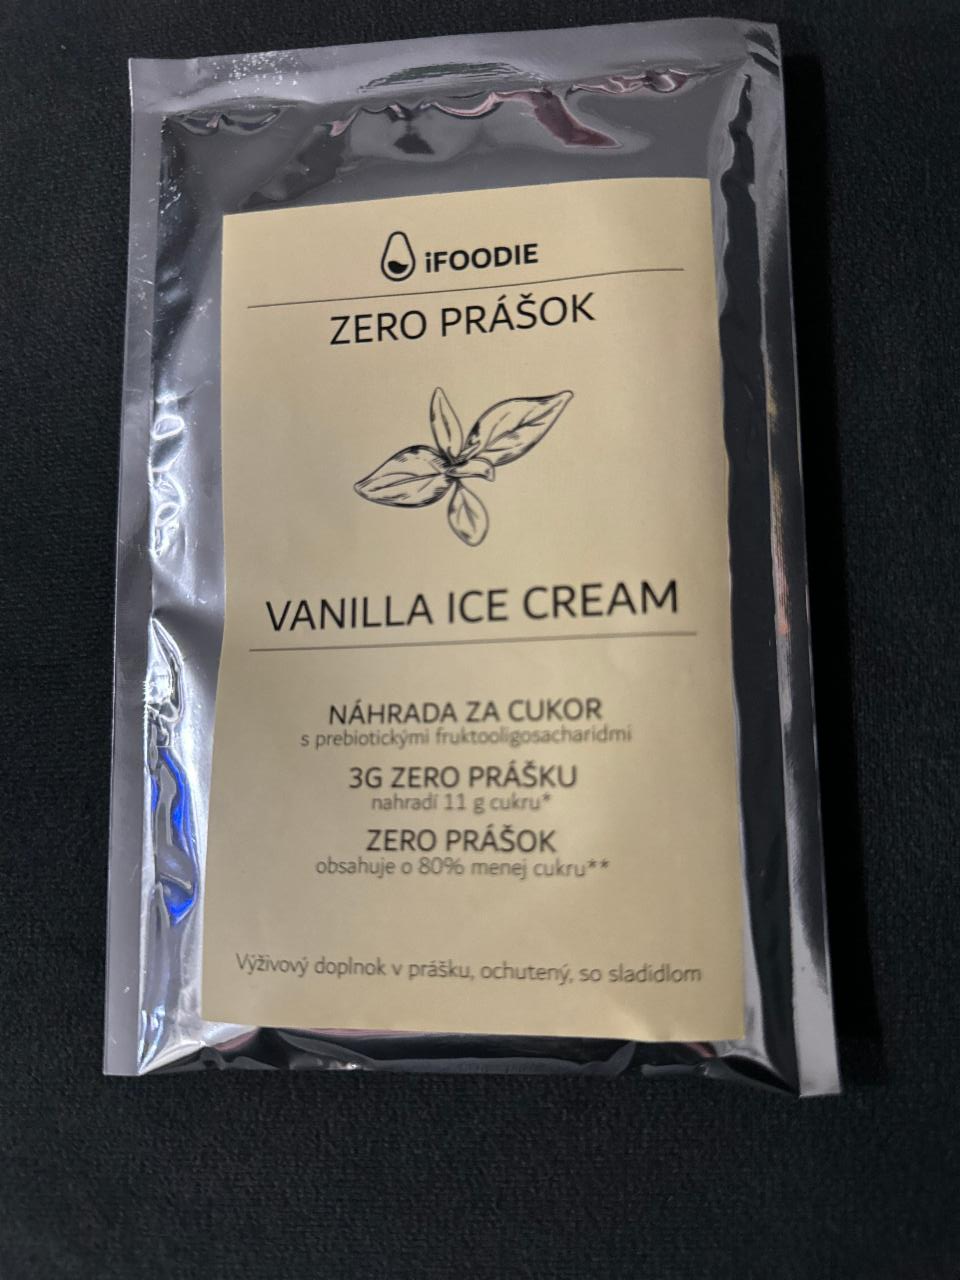 Fotografie - Zero prášok Vanilla ice cream iFoodie